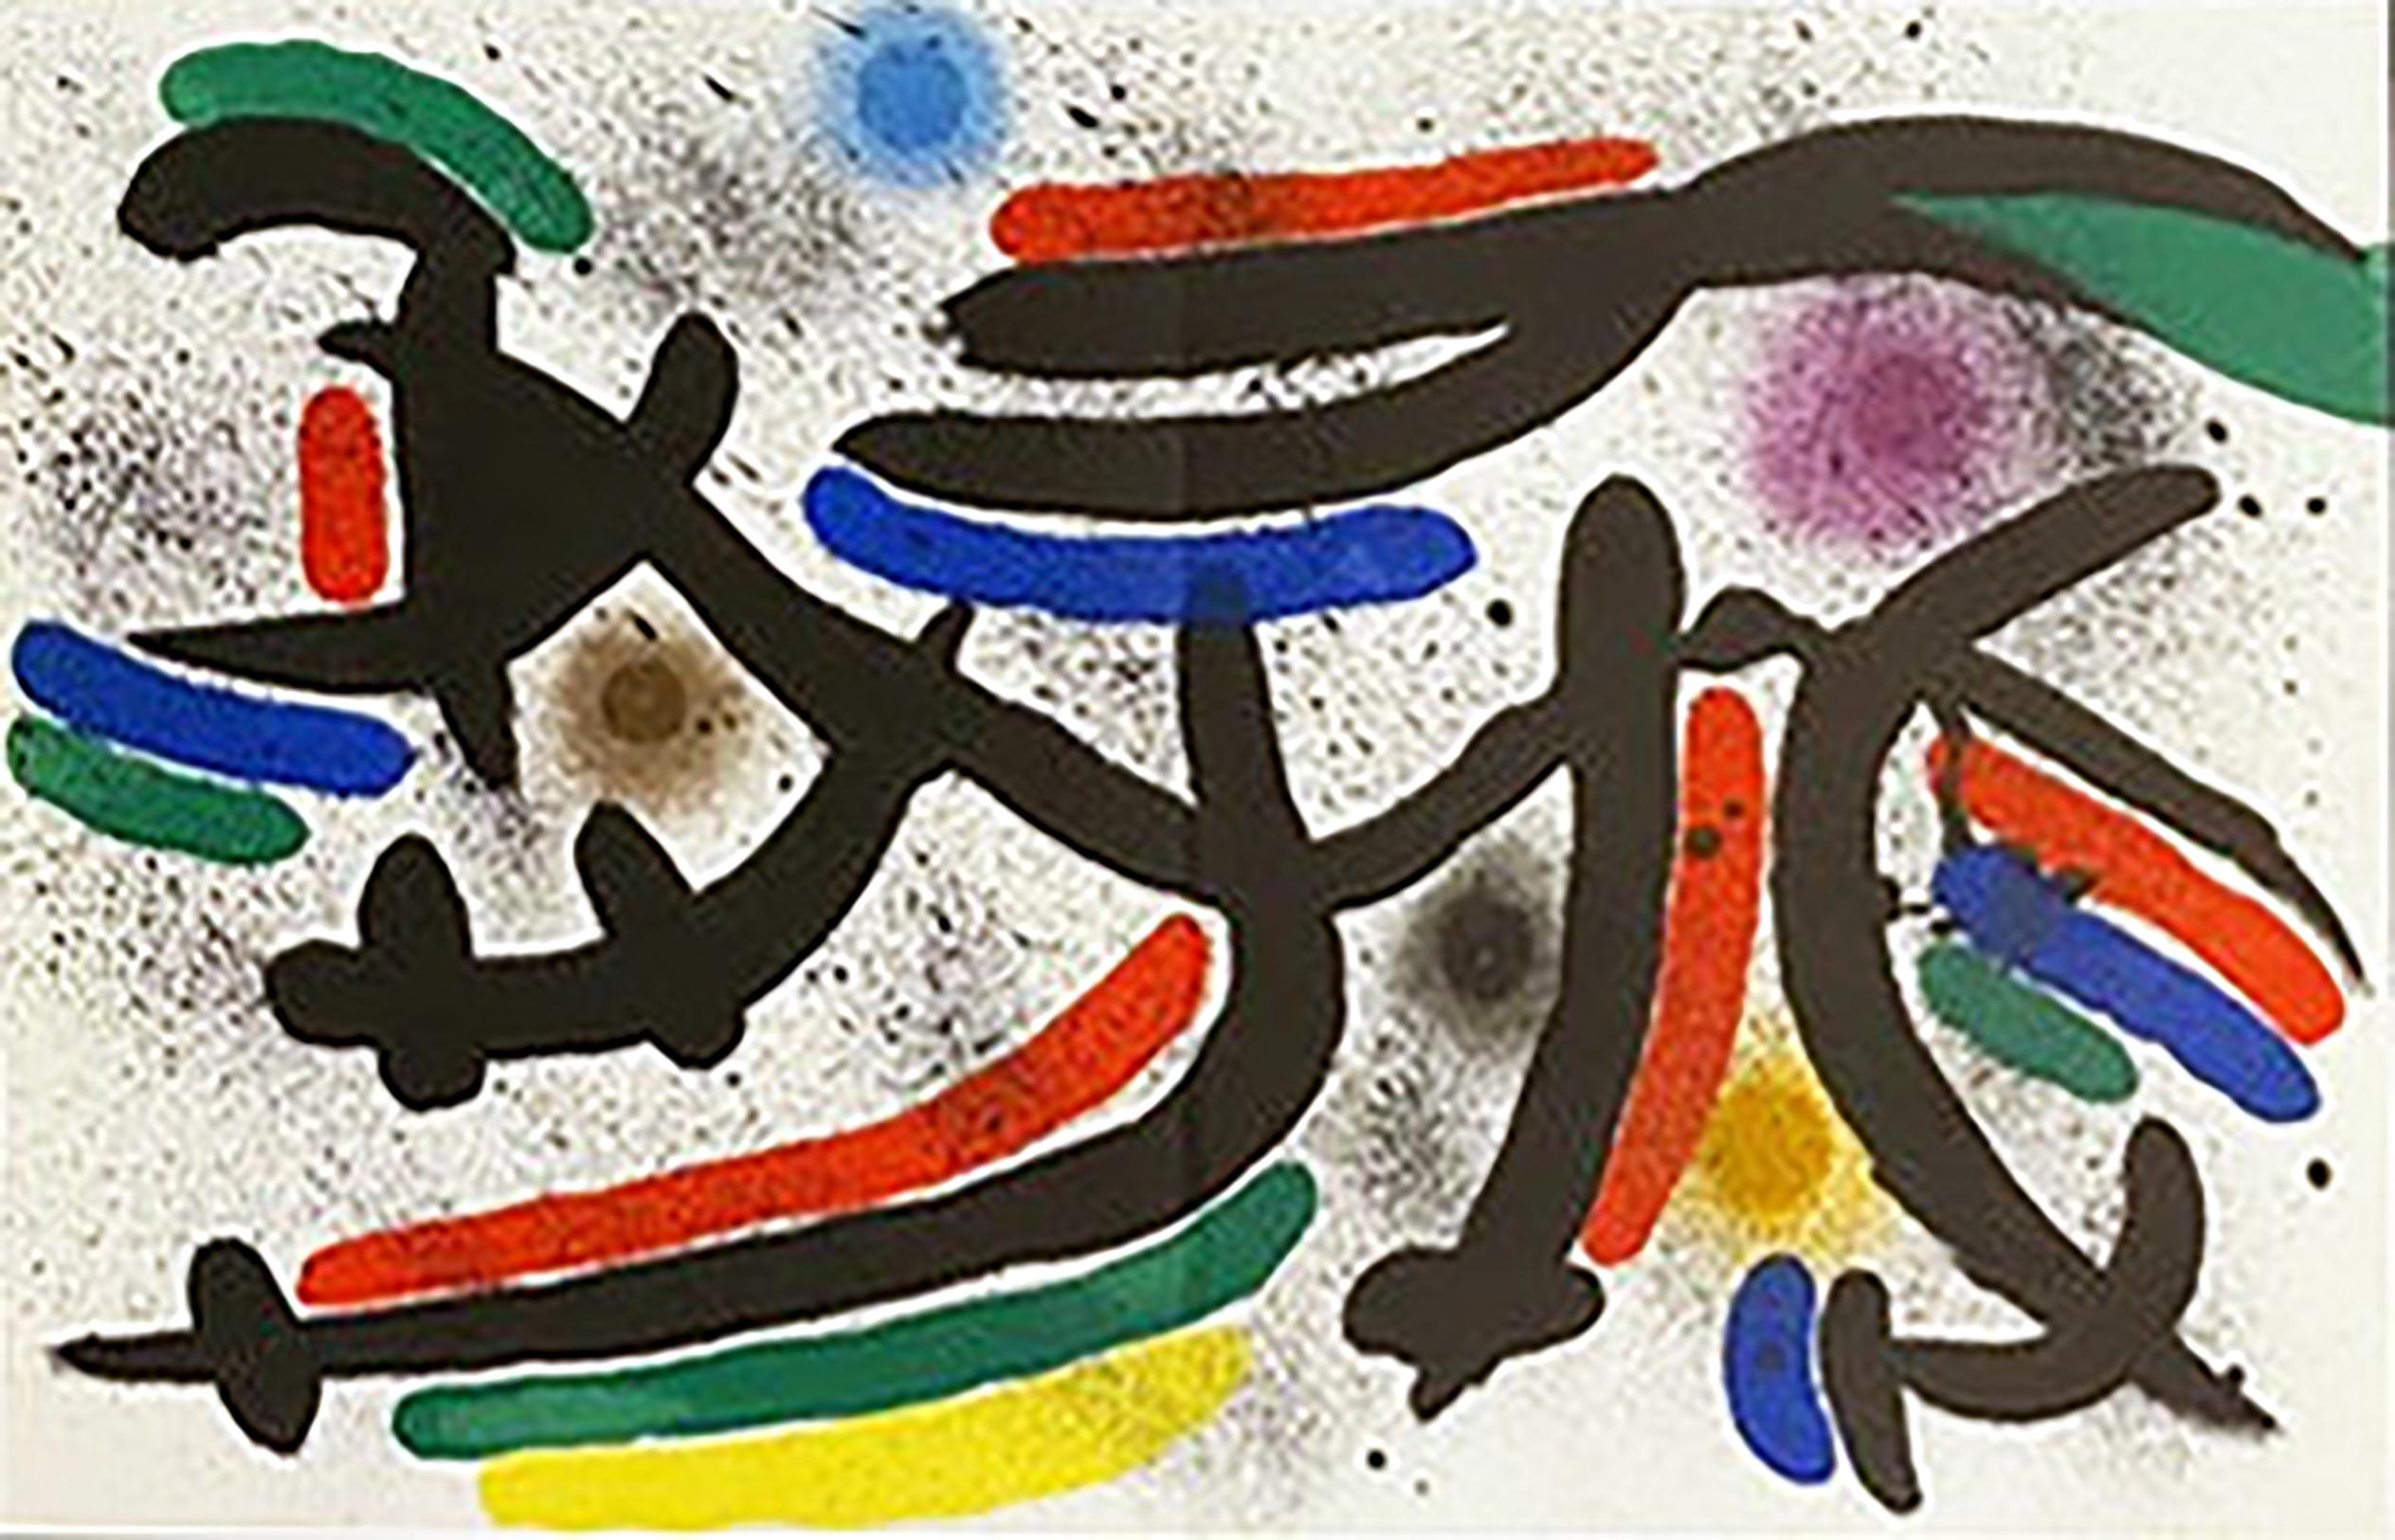 Miro Lithographe I, Plate IX - Print by Joan Miró